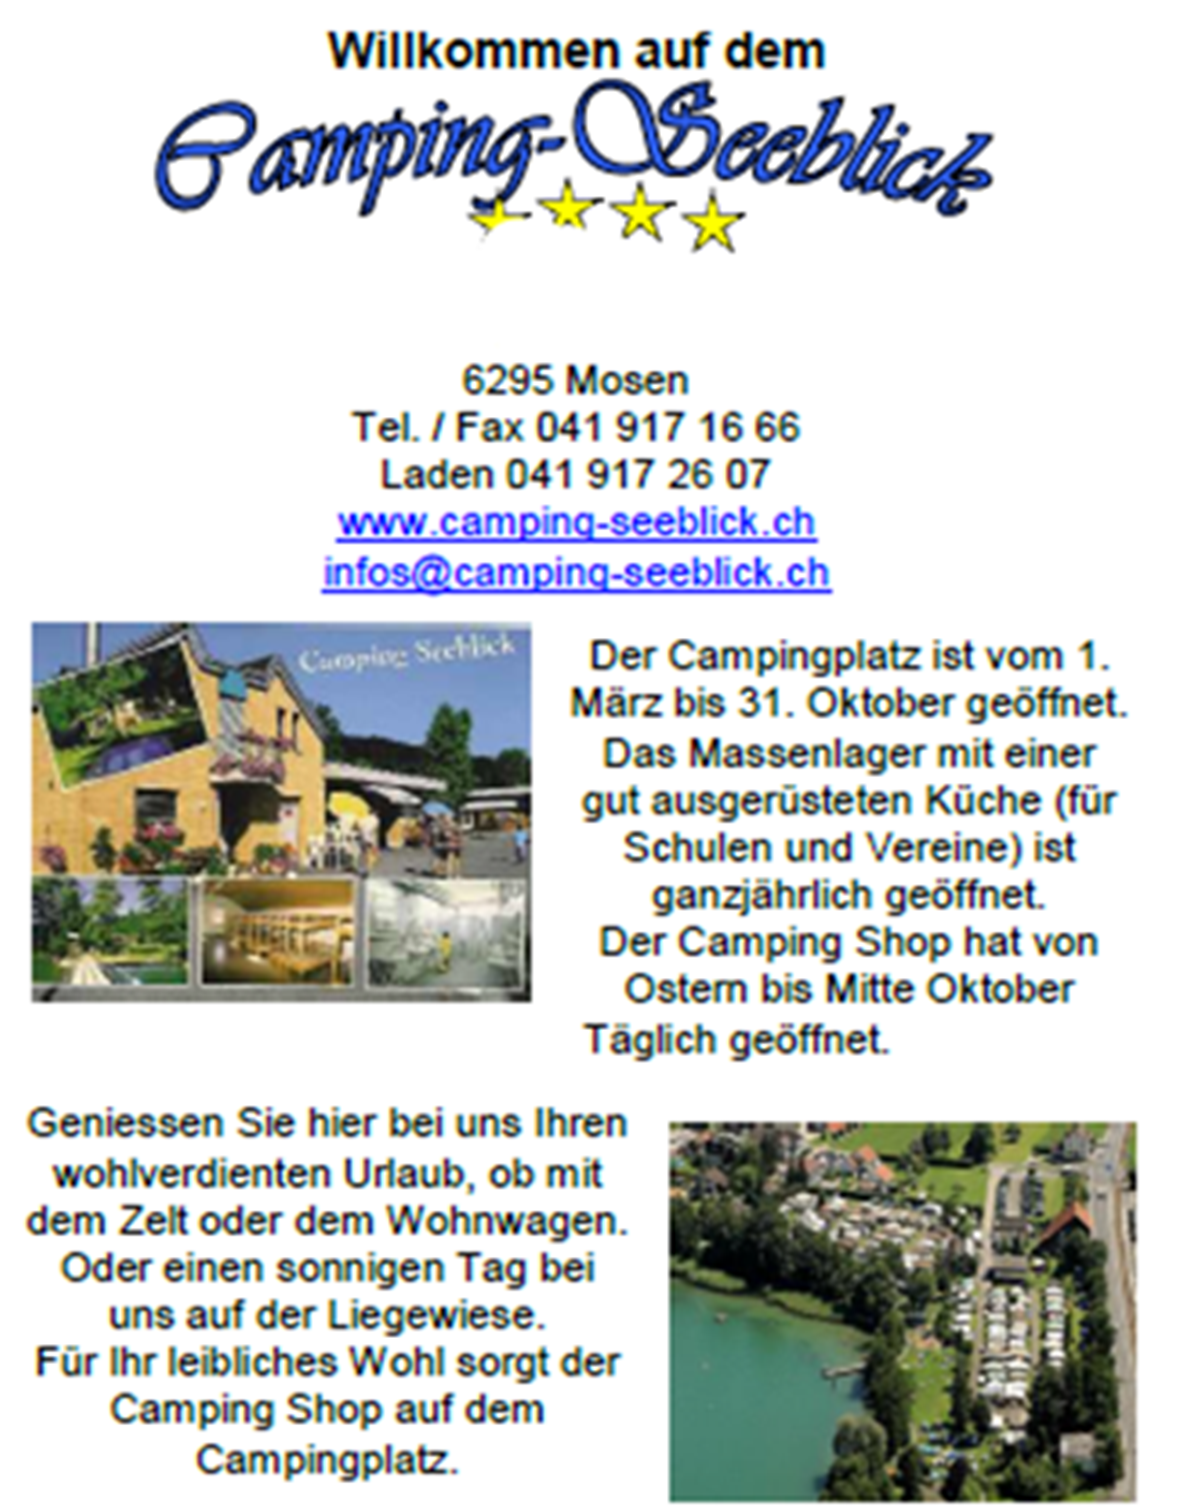 Camping-Seeblick AG Mosen (1) (1)